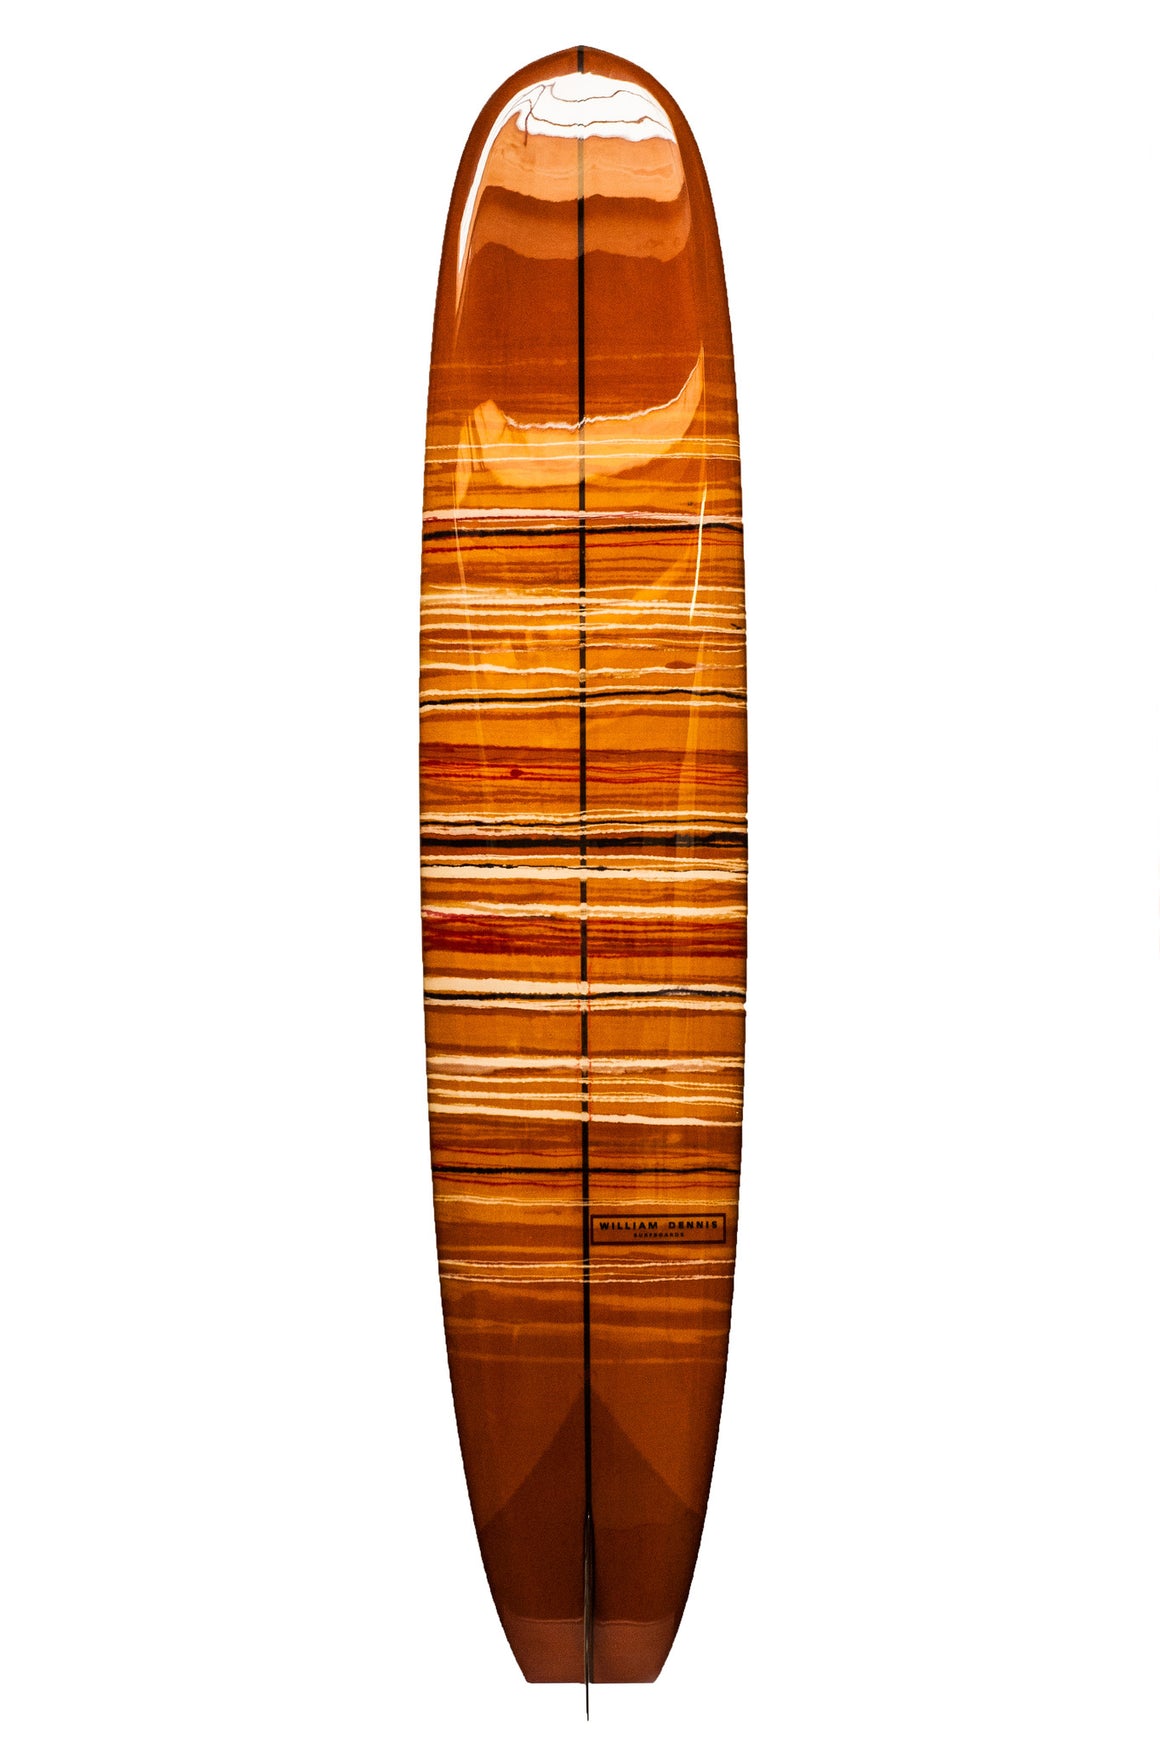 William Dennis Custom "Ben Samuel Model" Longboard Surfboard - Ventura Surf Shop